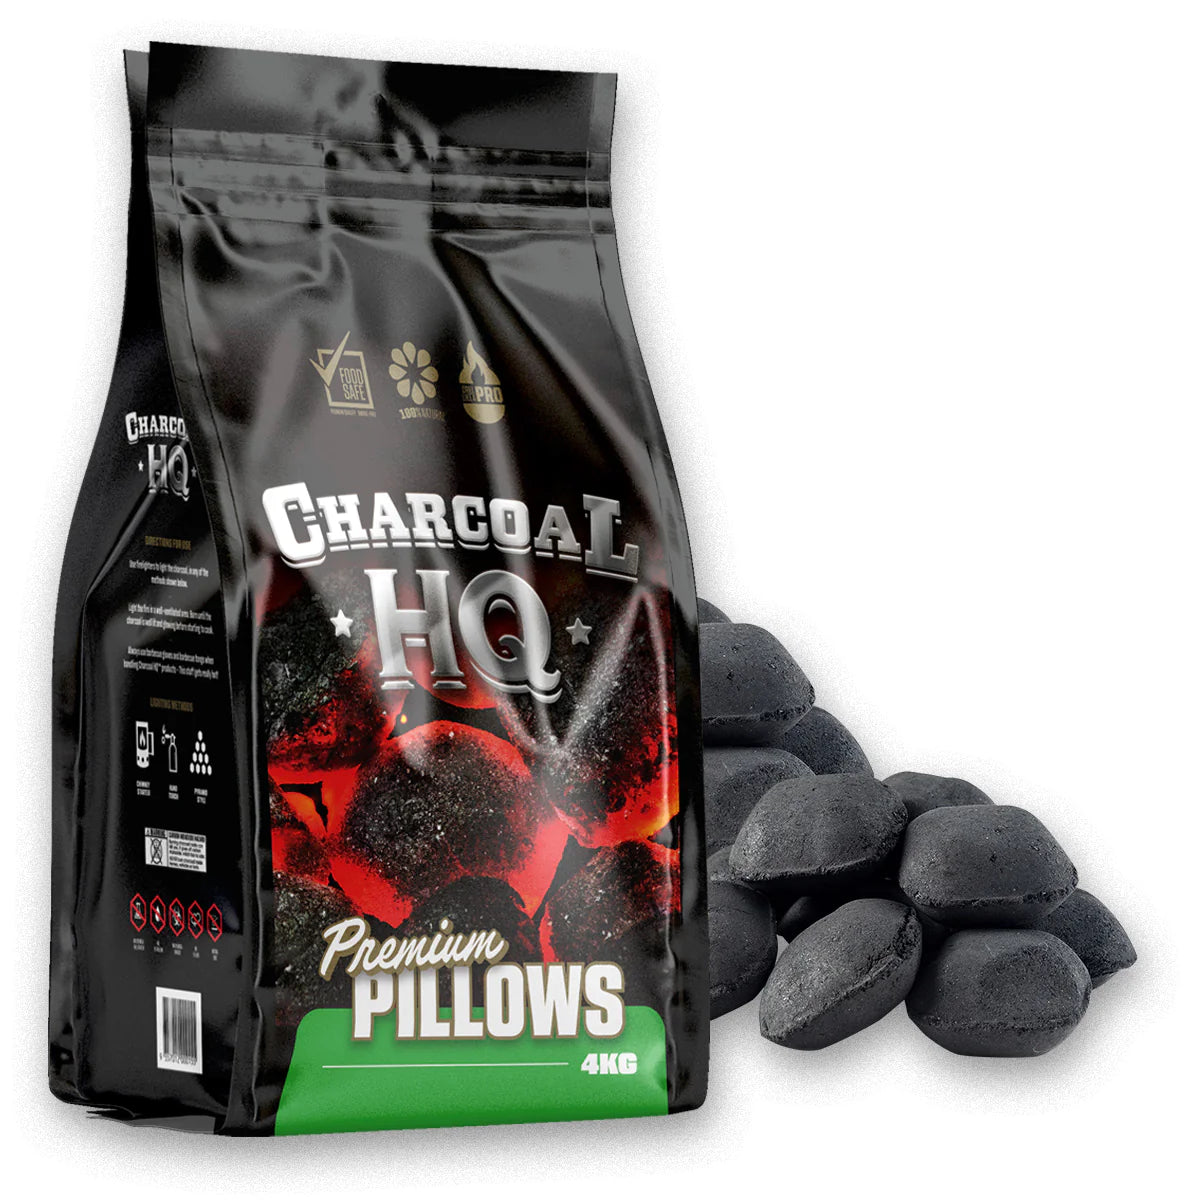 Charcoal HQ - Premium Charcoal Pillows 4kg